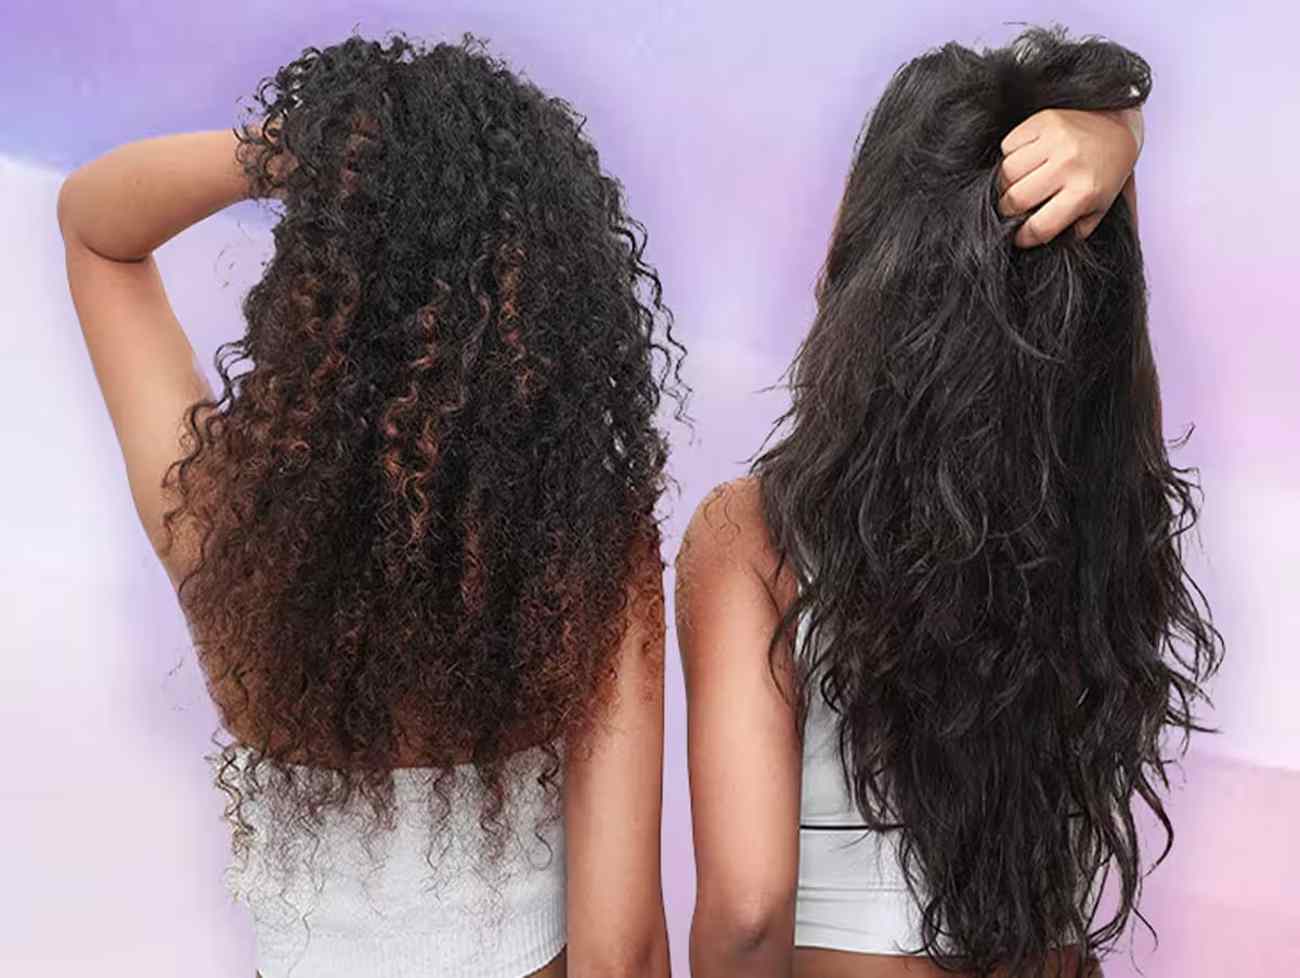 Silky Hair: વાળને સુંદર અને સિલ્કી બનાવવા હોય તો ટ્રાય કરો આ હેર કેર ટીપ્સ